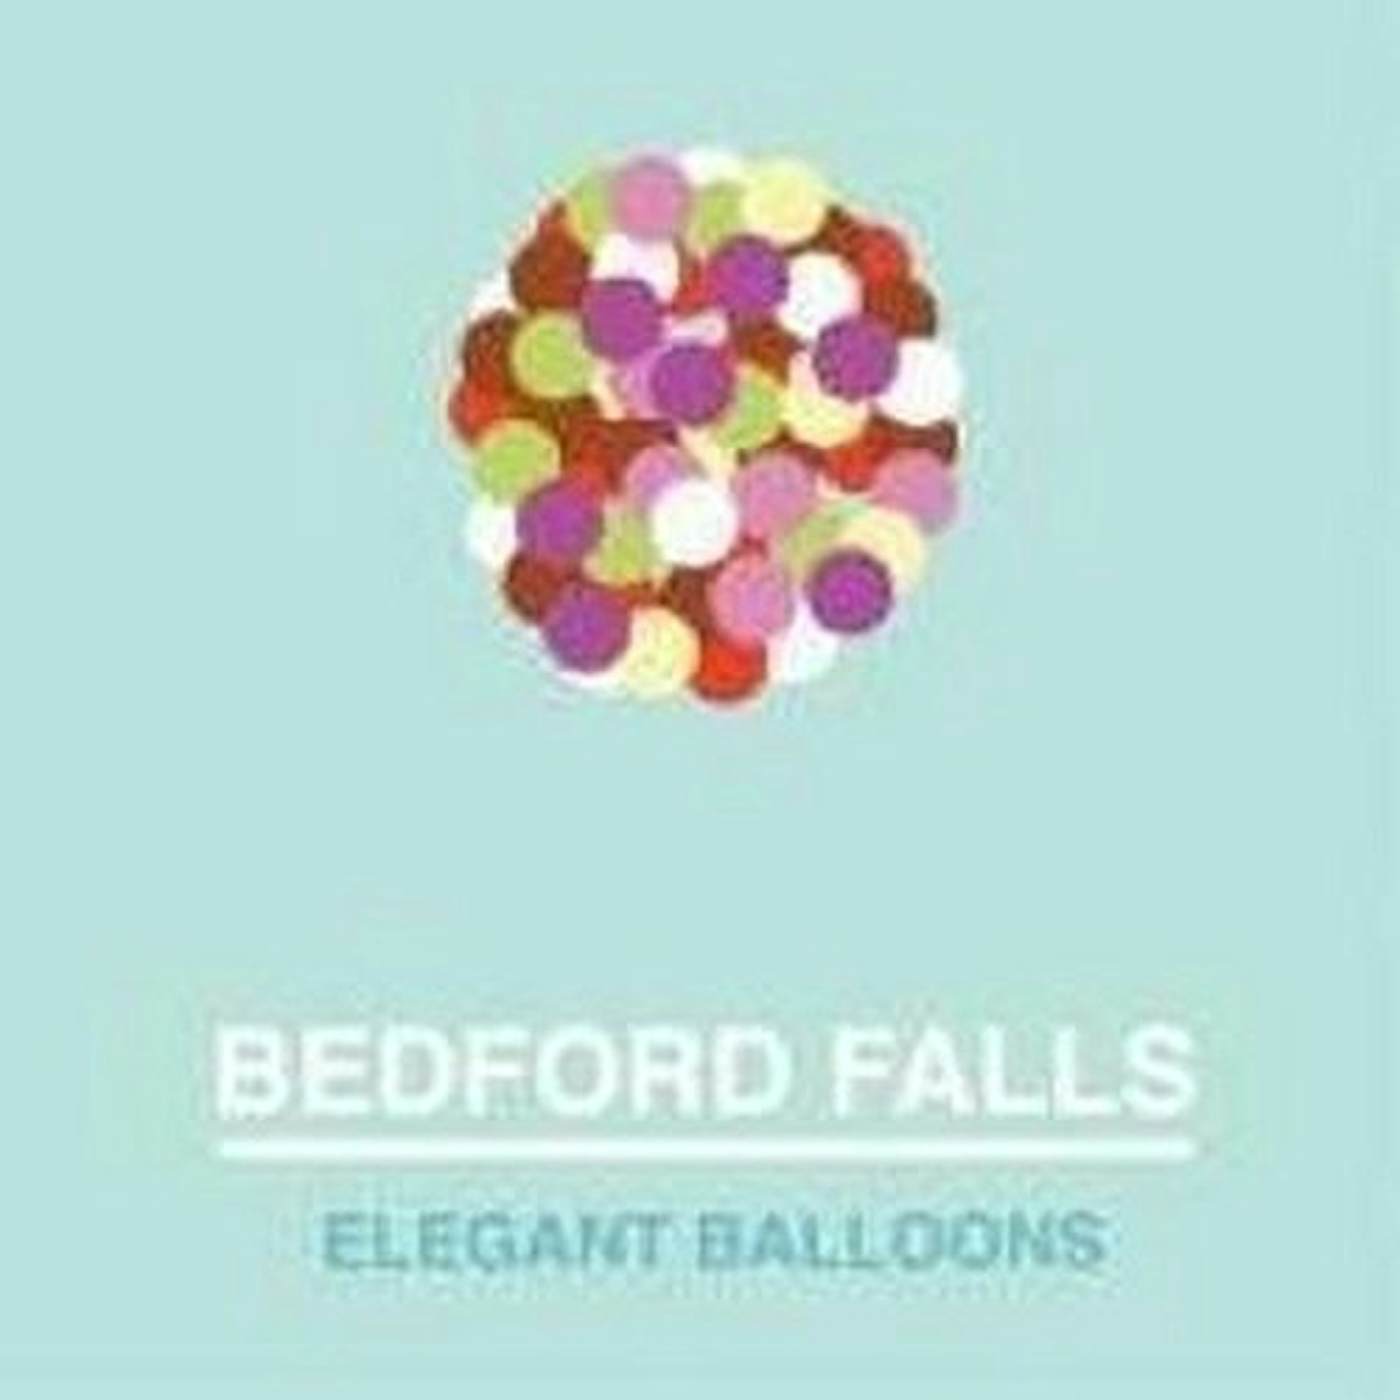 Bedford Falls Elegant Balloons Vinyl Record